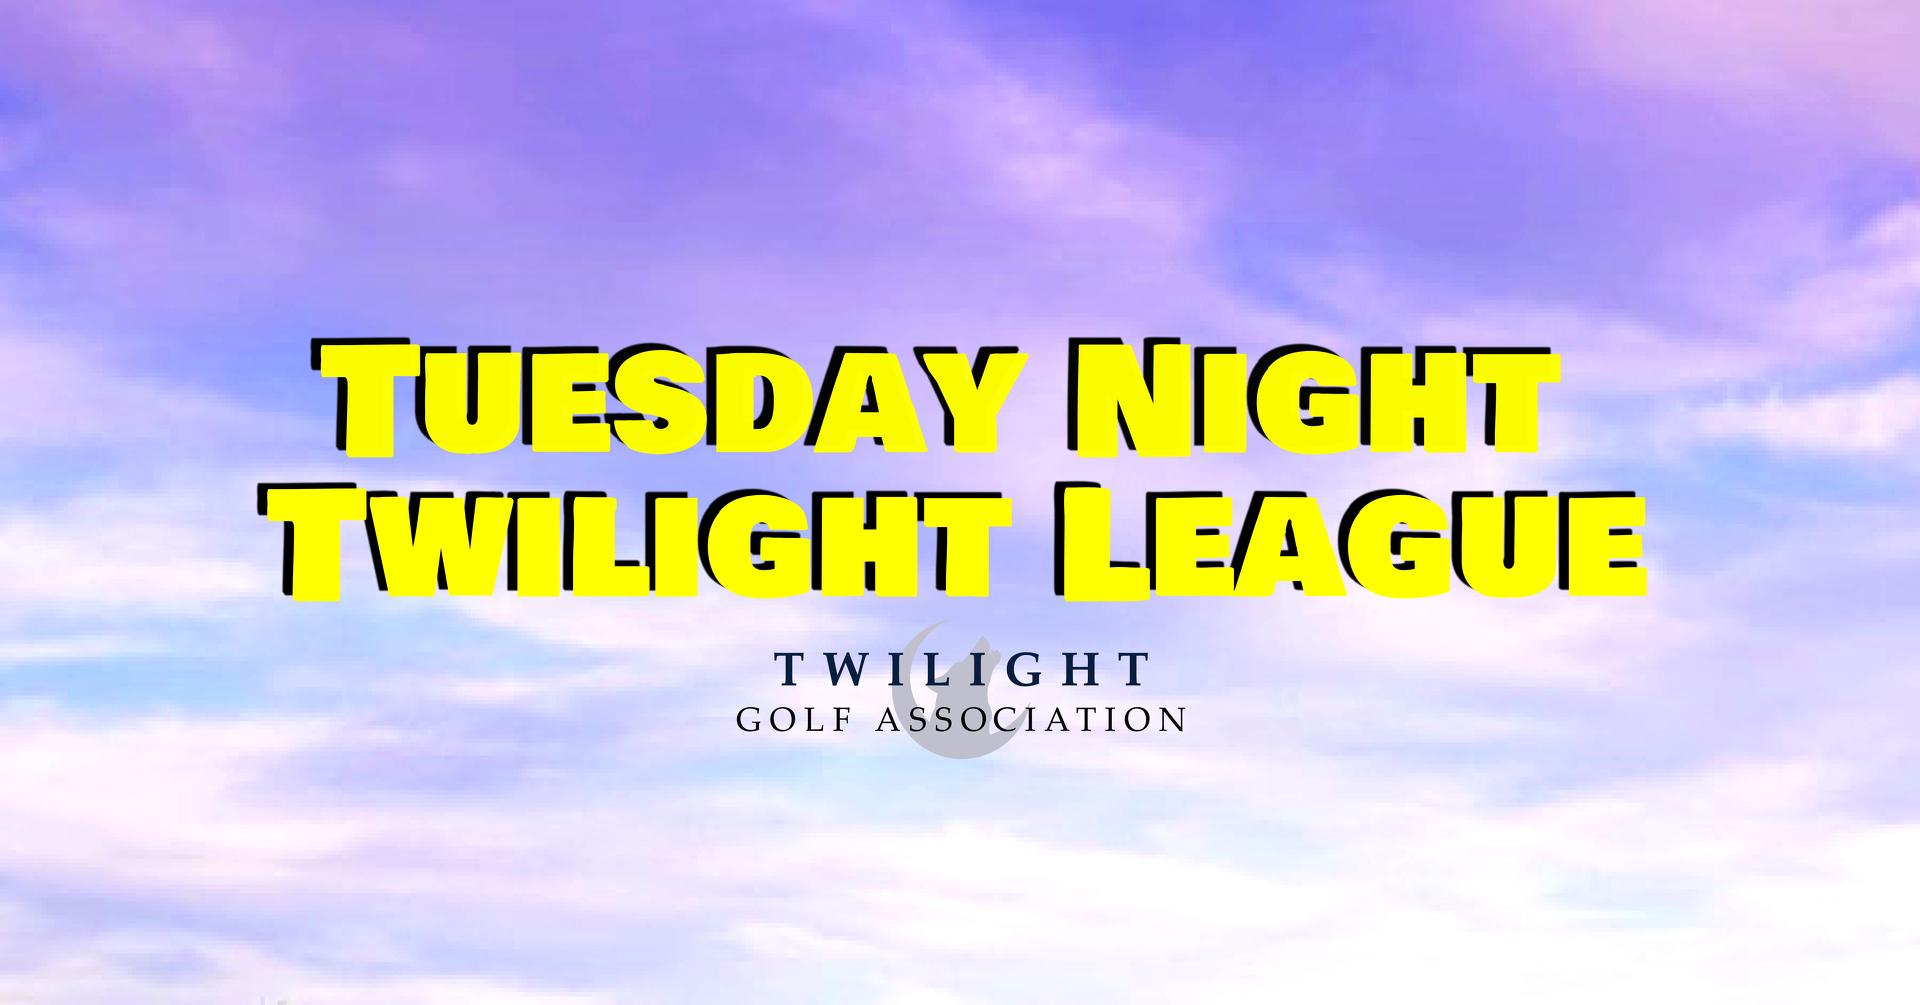 Tuesday Twilight League at Heritage Creek Golf Club